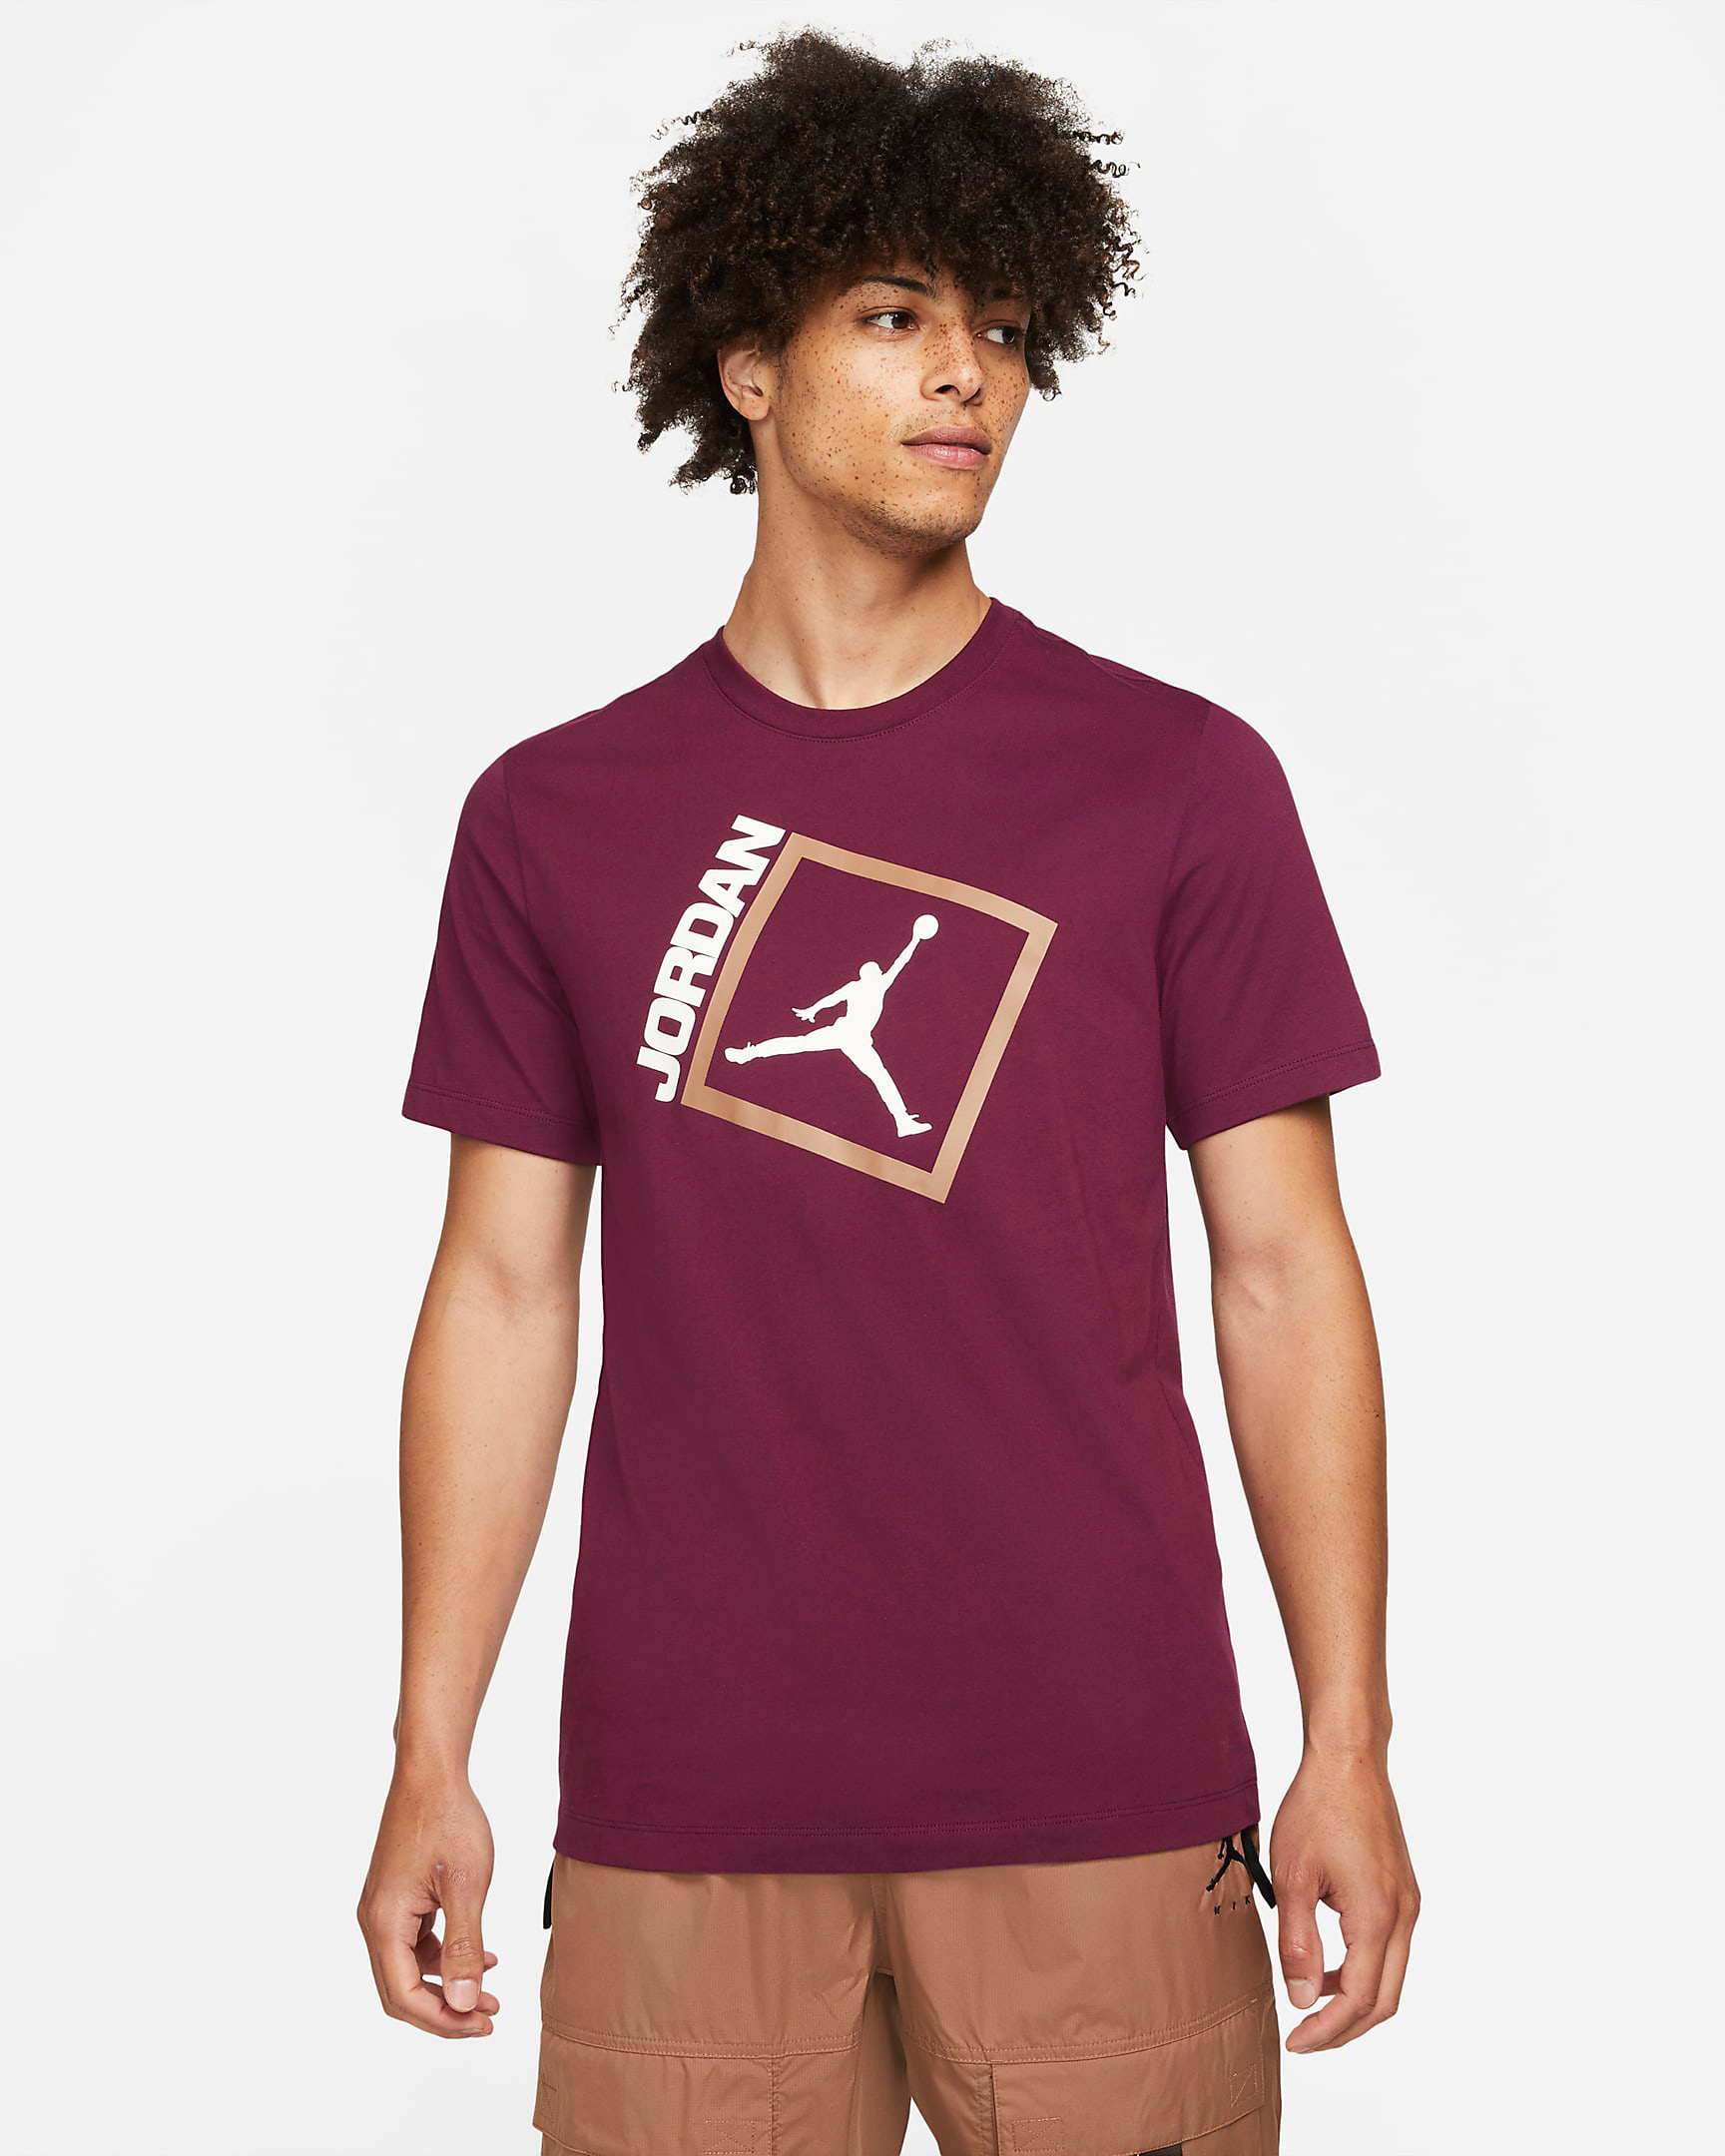 jordan-6-bordeaux-matching-shirt